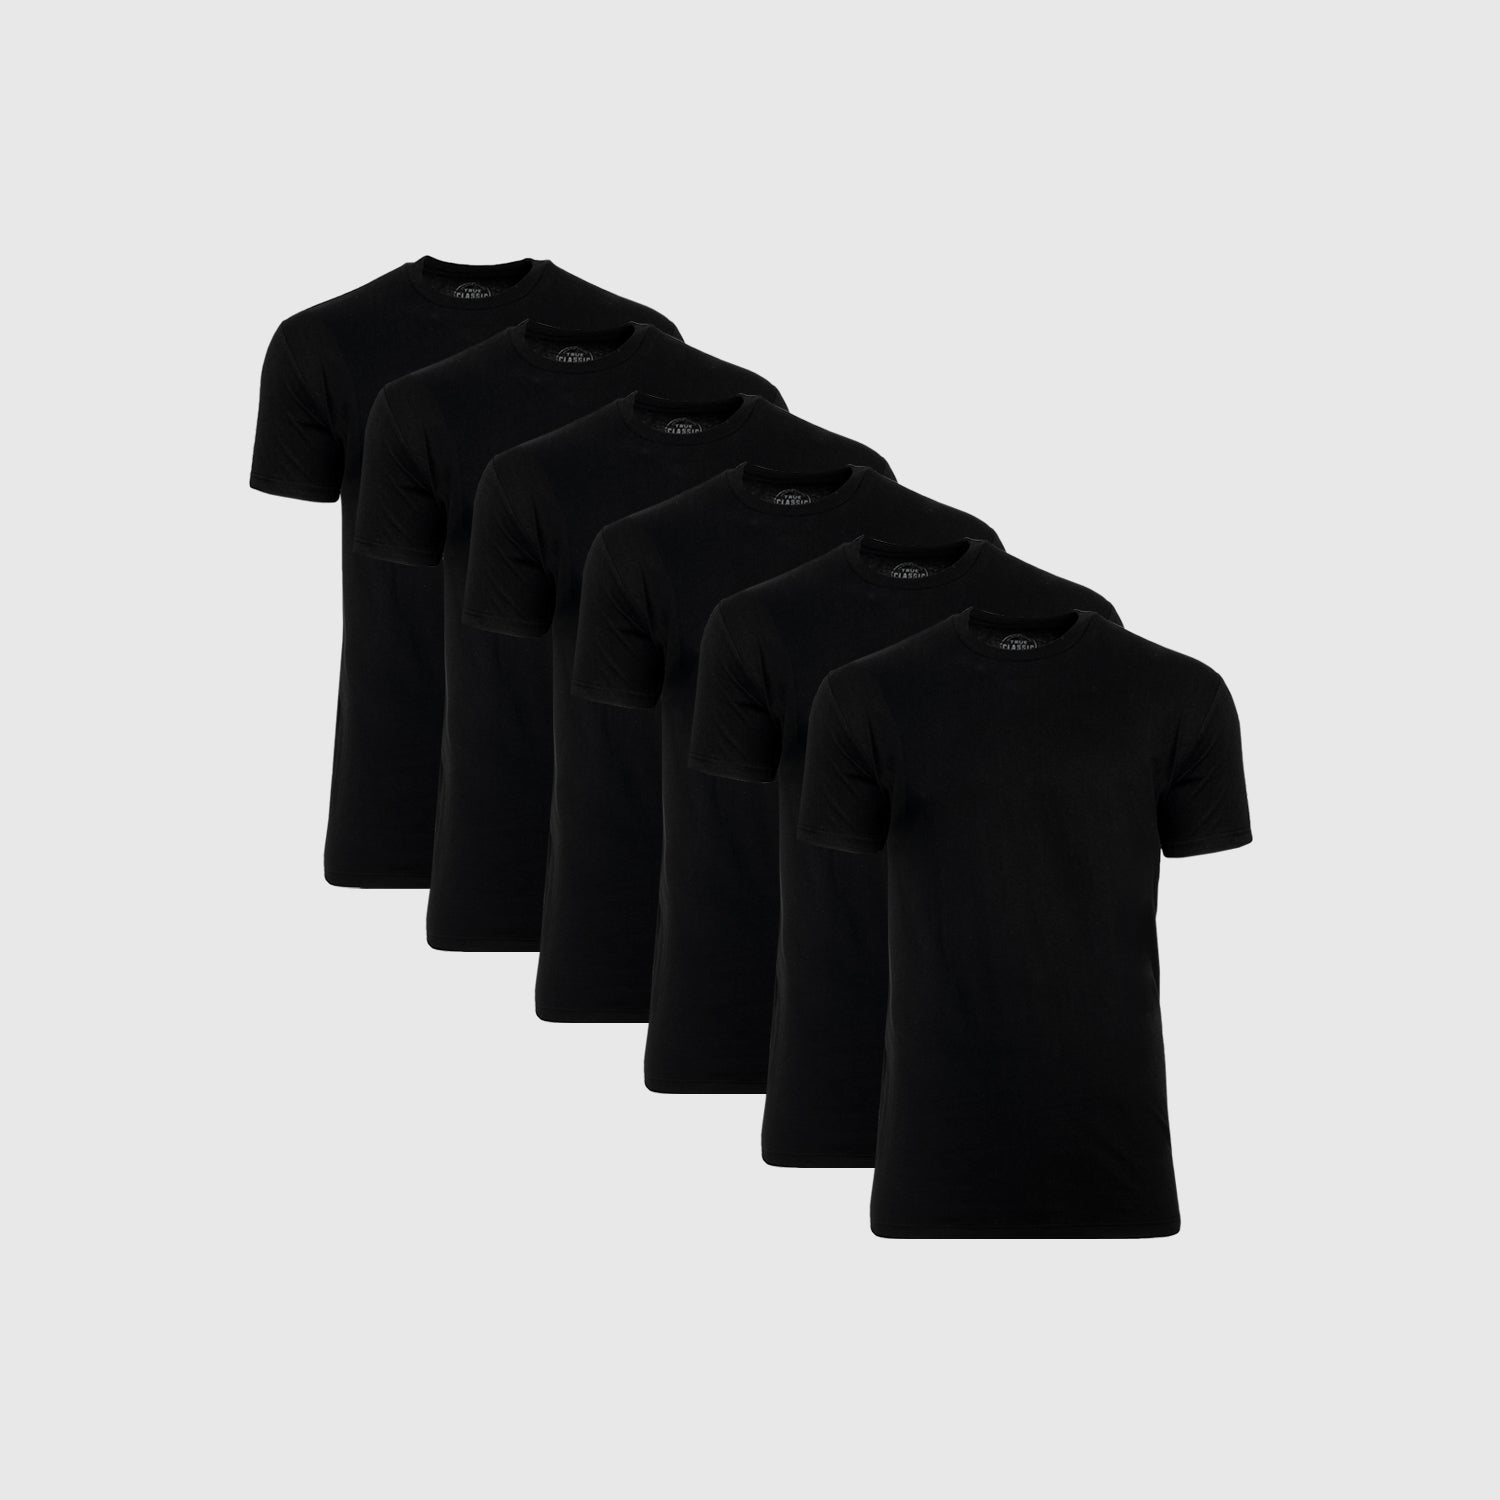 All Black Tall Round Hem Crew Neck T-Shirt 6-Pack